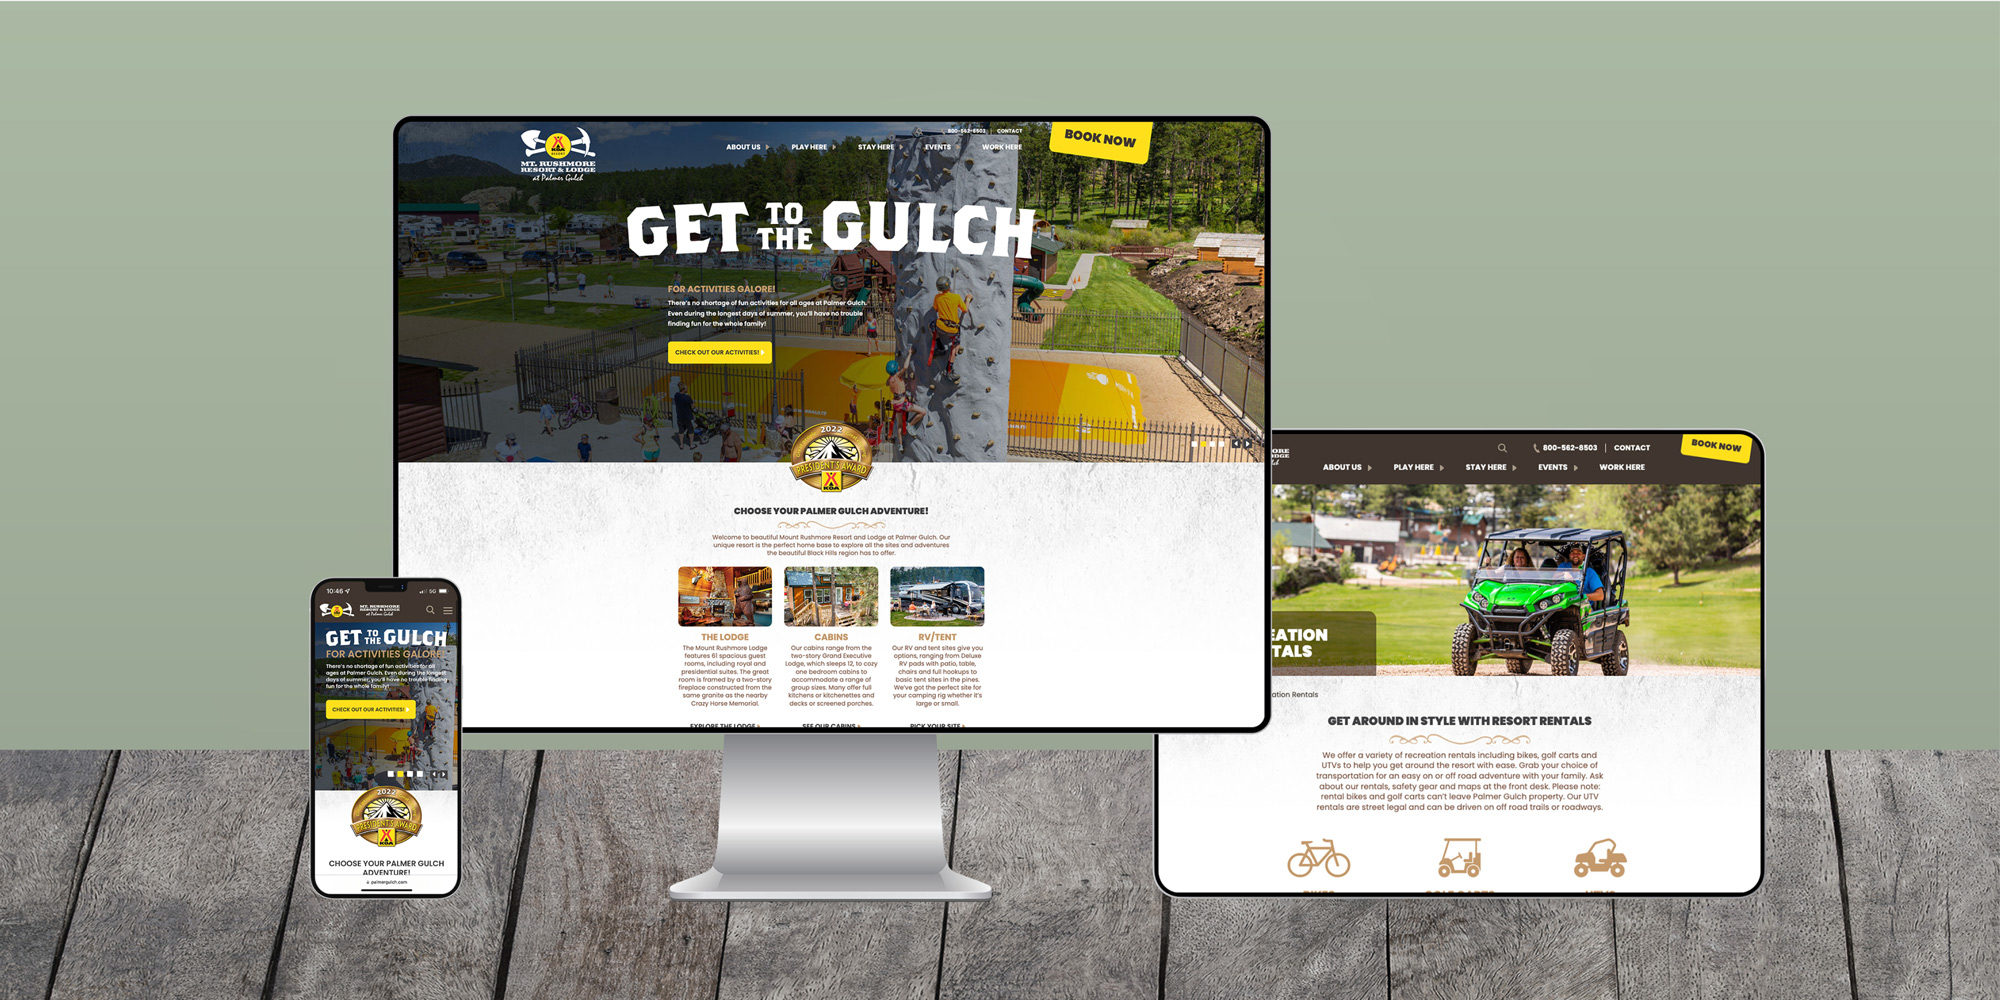 Palmer Gulch KOA website on iphone, desktop and ipad